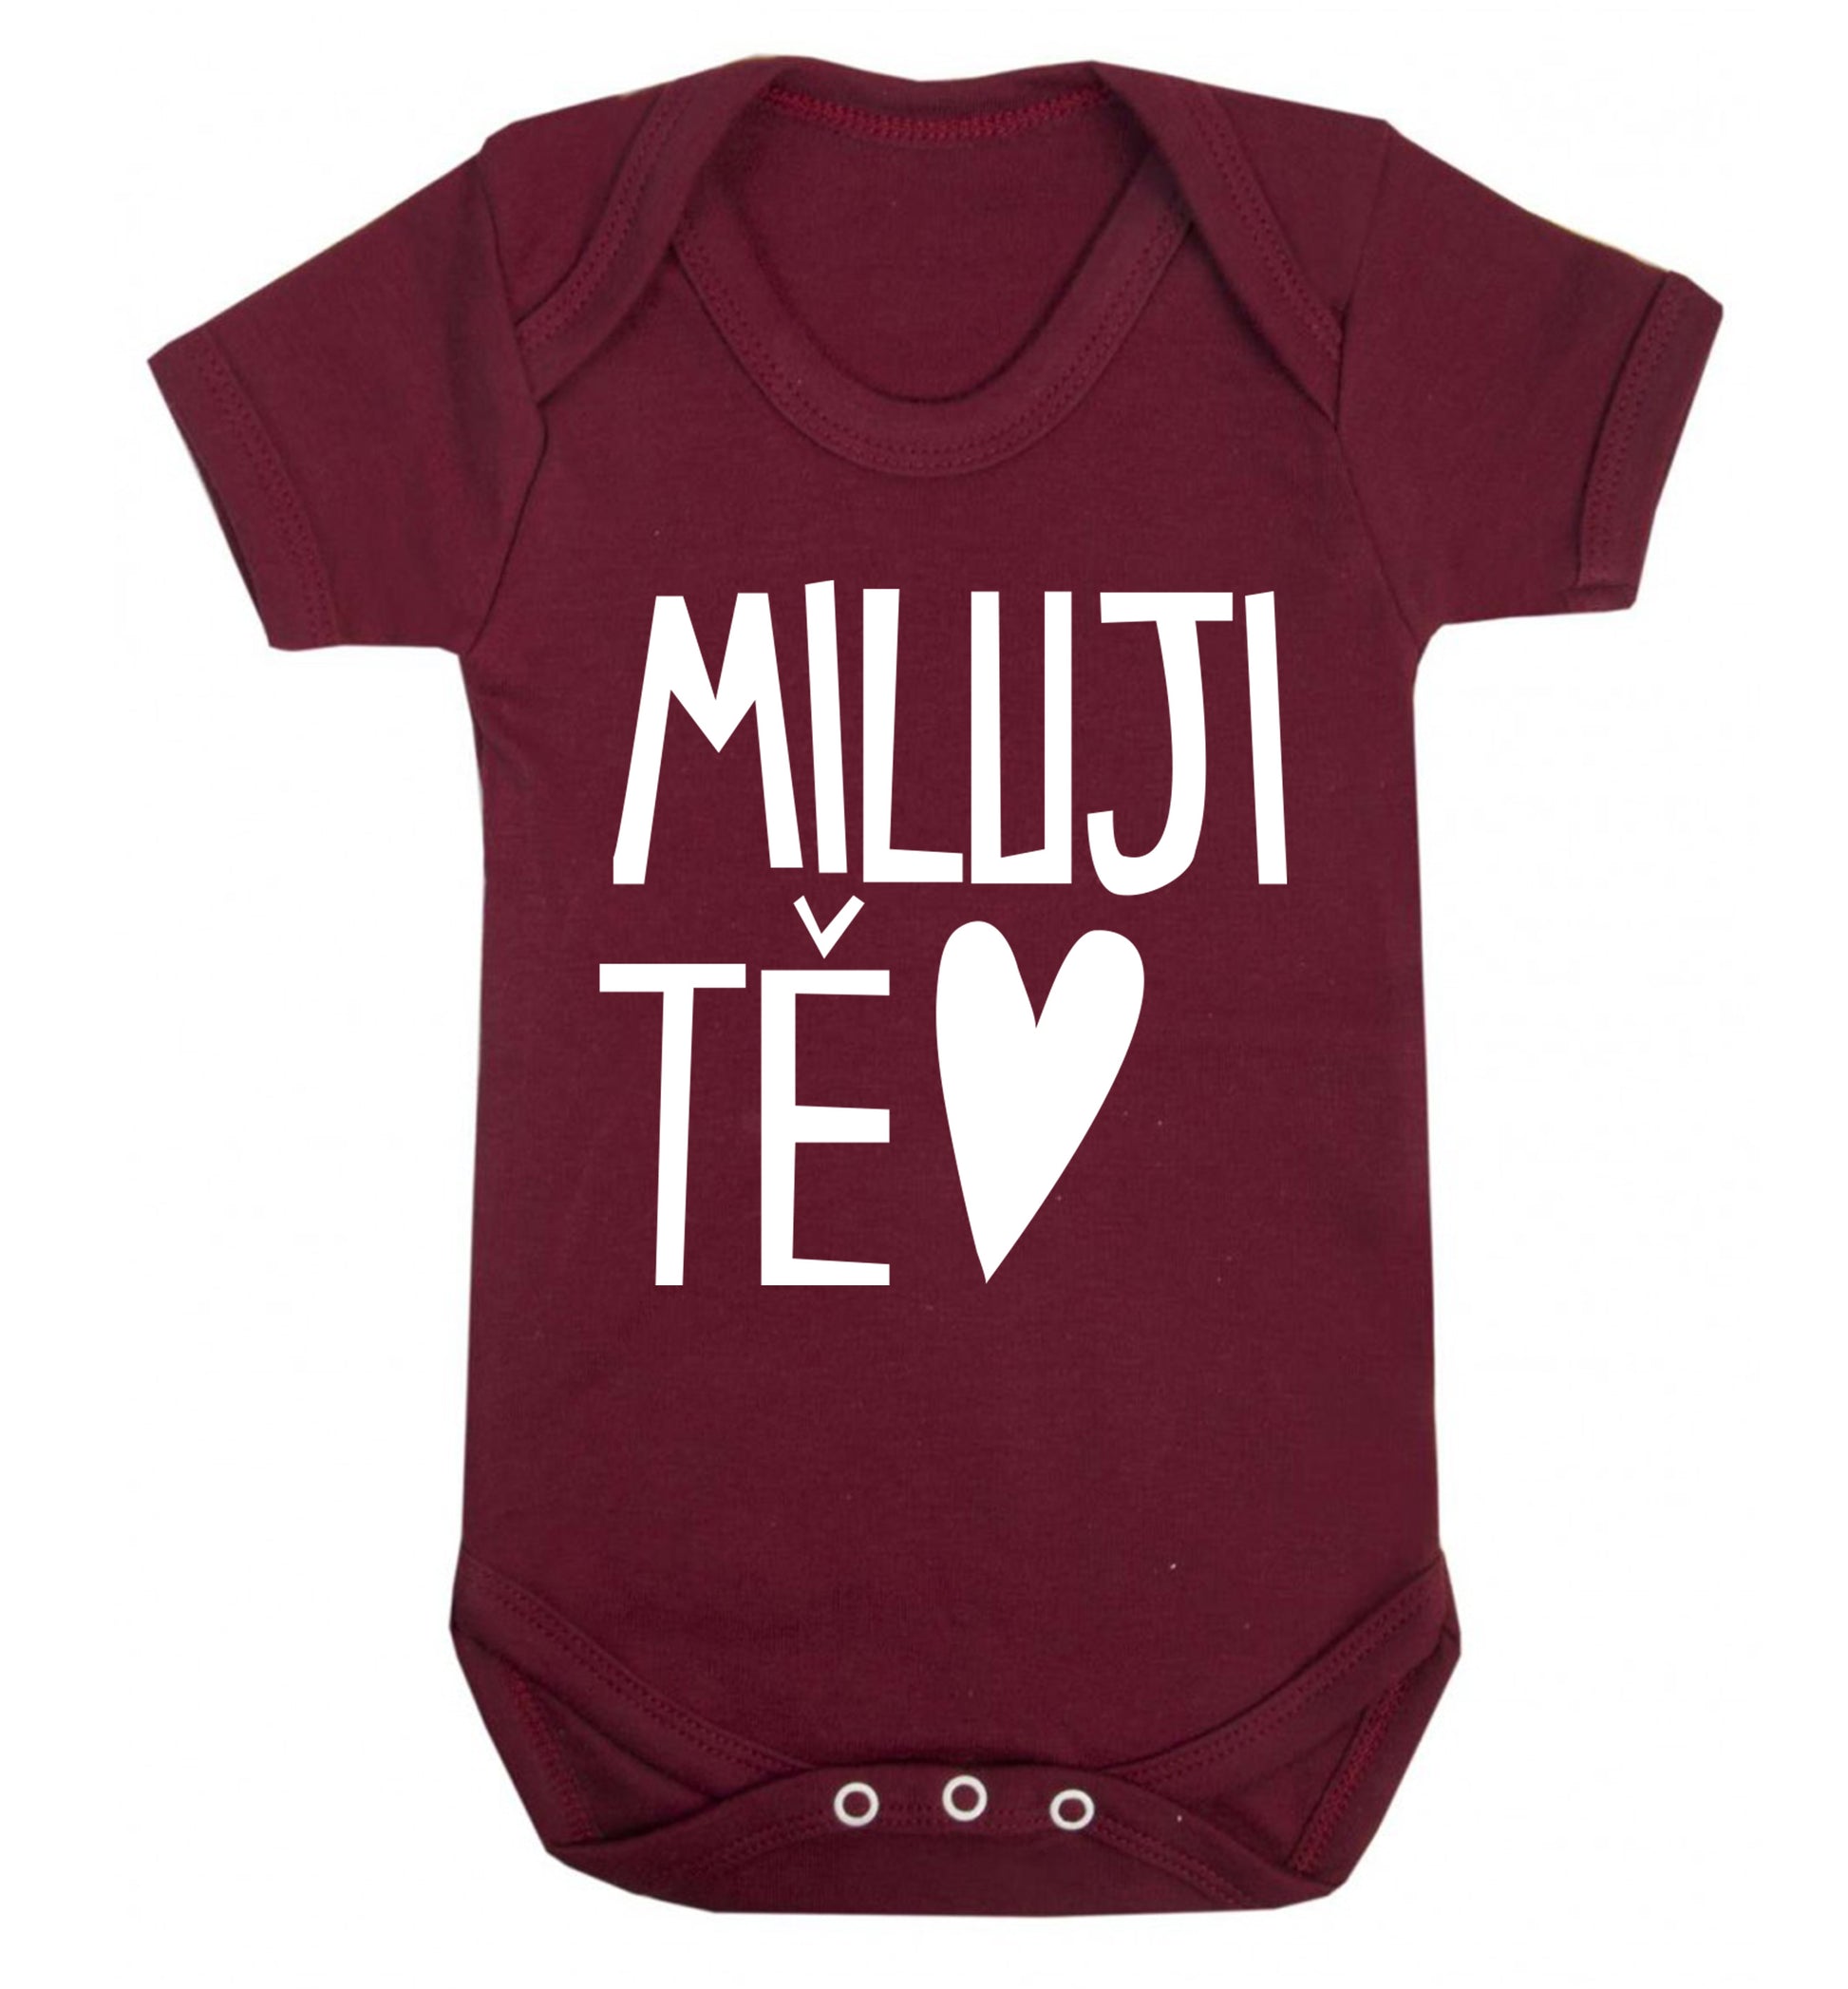 Miluji T_ - I love you Baby Vest maroon 18-24 months